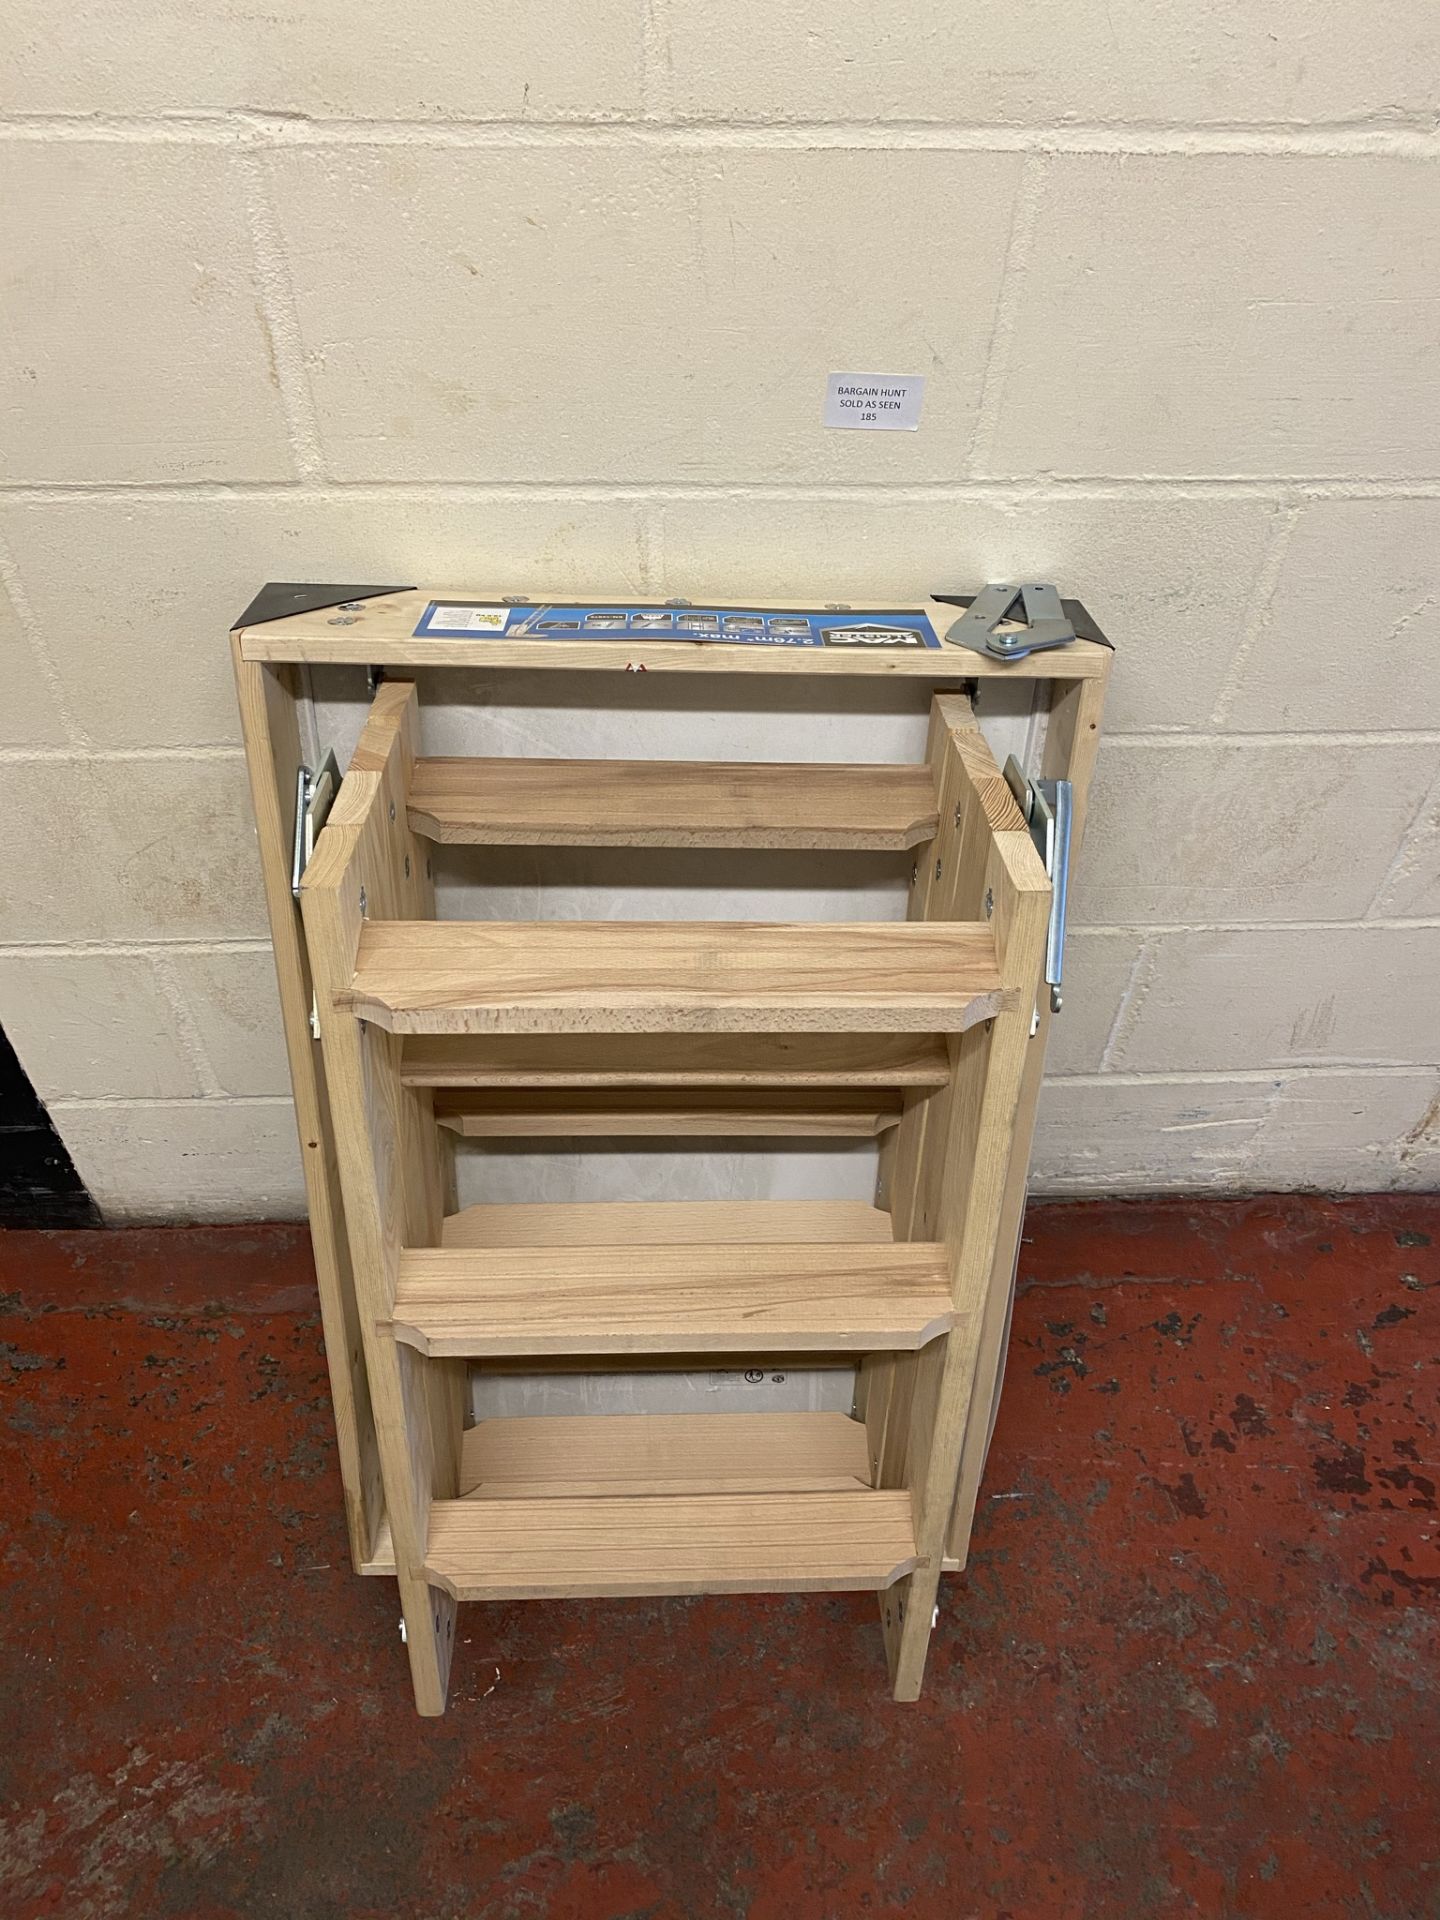 Mac Allister 4 Section 12 Tread Loft Ladder Kit RRP £177